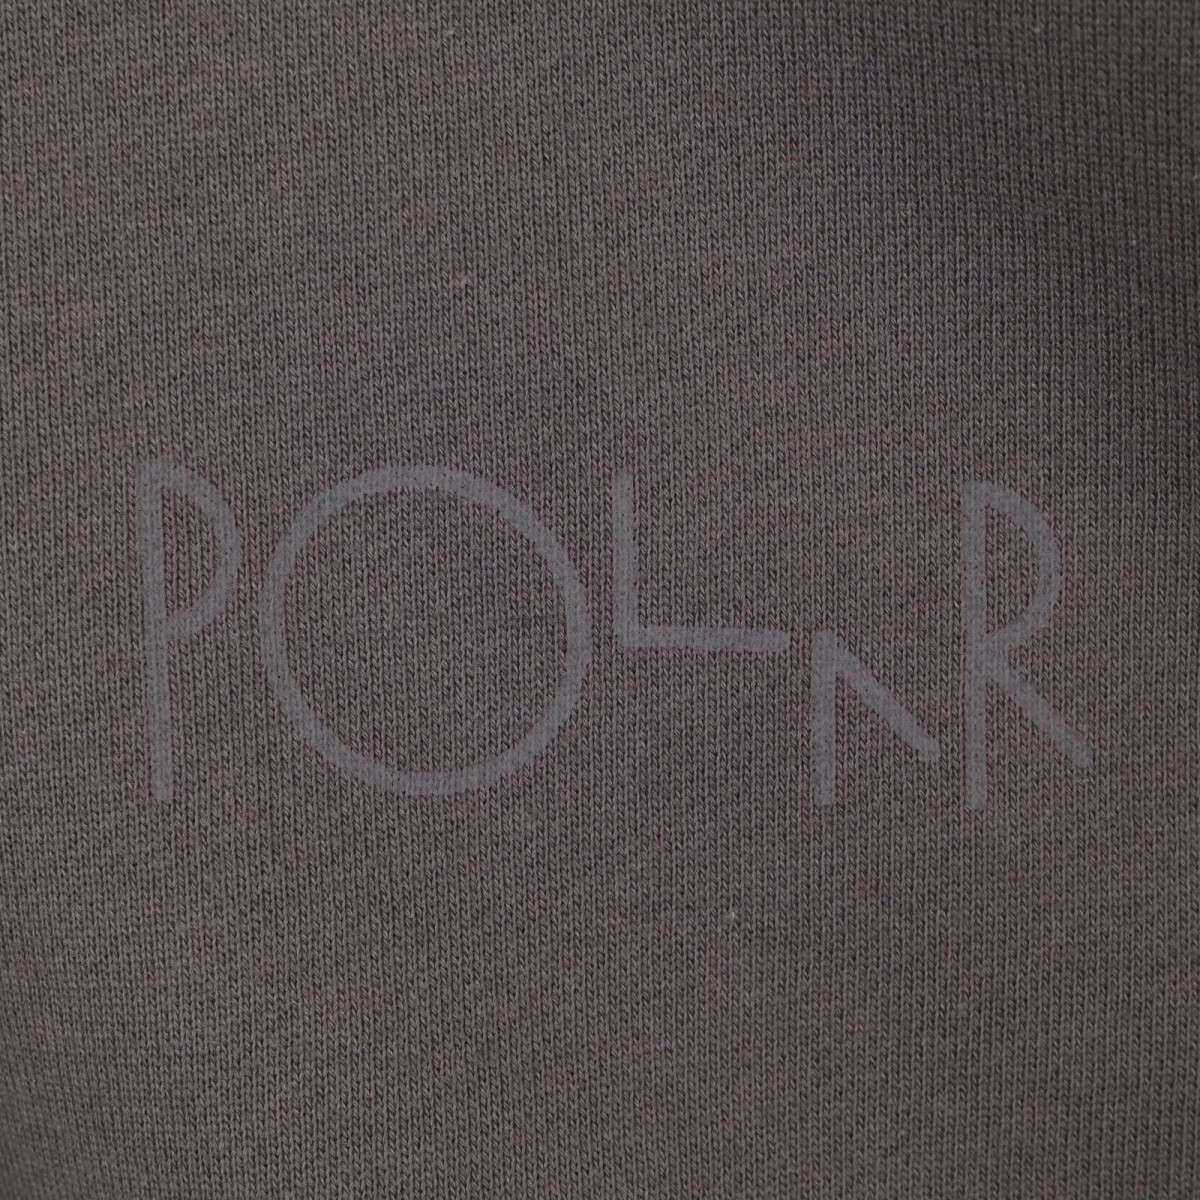 POLAR SKATE CO / STROKE LOGO HOODIE Pola - skate Company sweat Parker f-ti declared size M